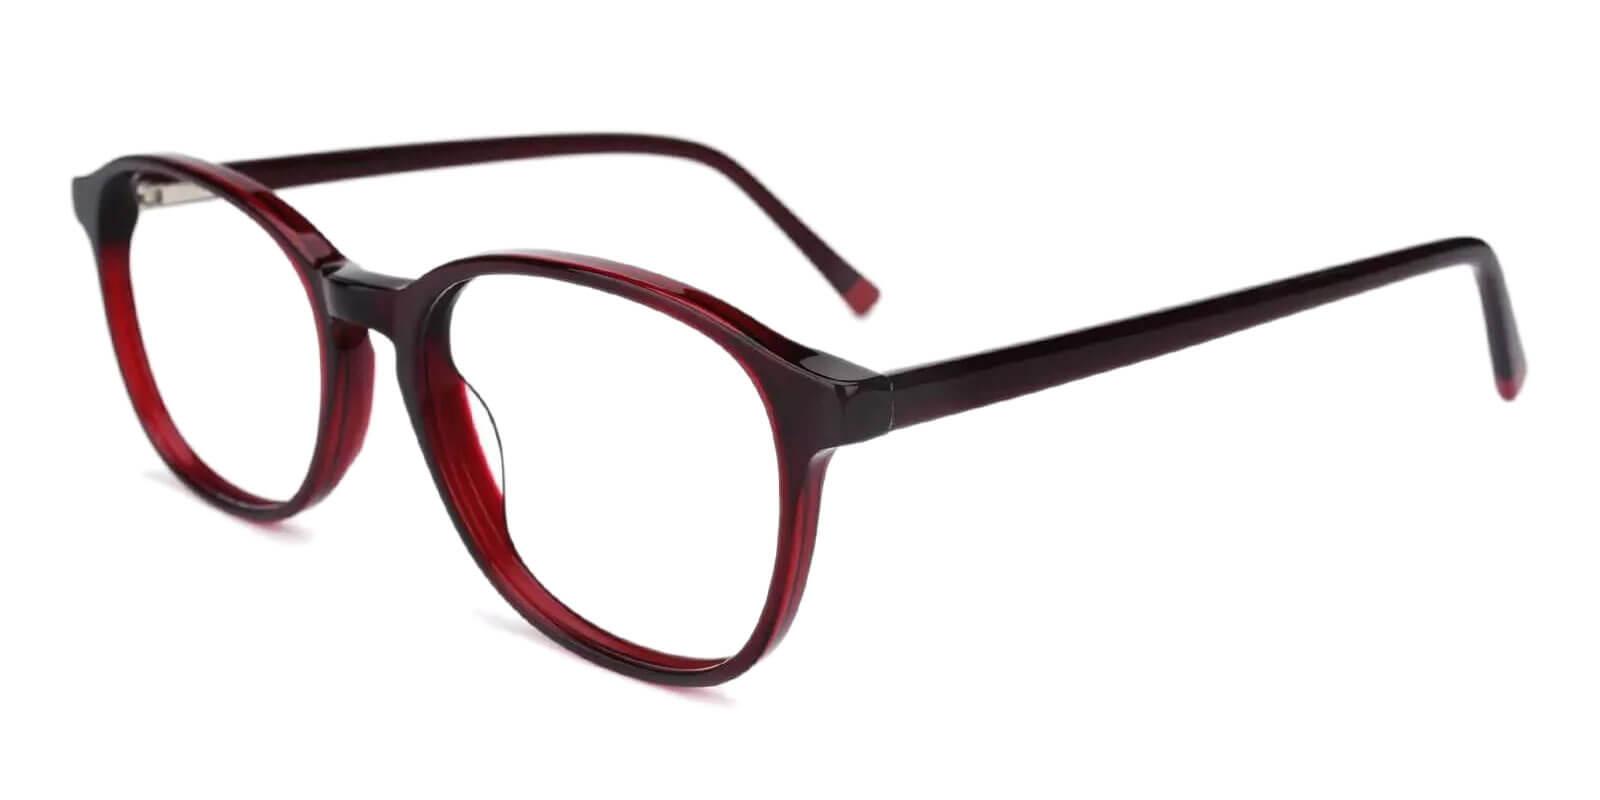 Brunei Brown Acetate Eyeglasses , SpringHinges , UniversalBridgeFit Frames from ABBE Glasses